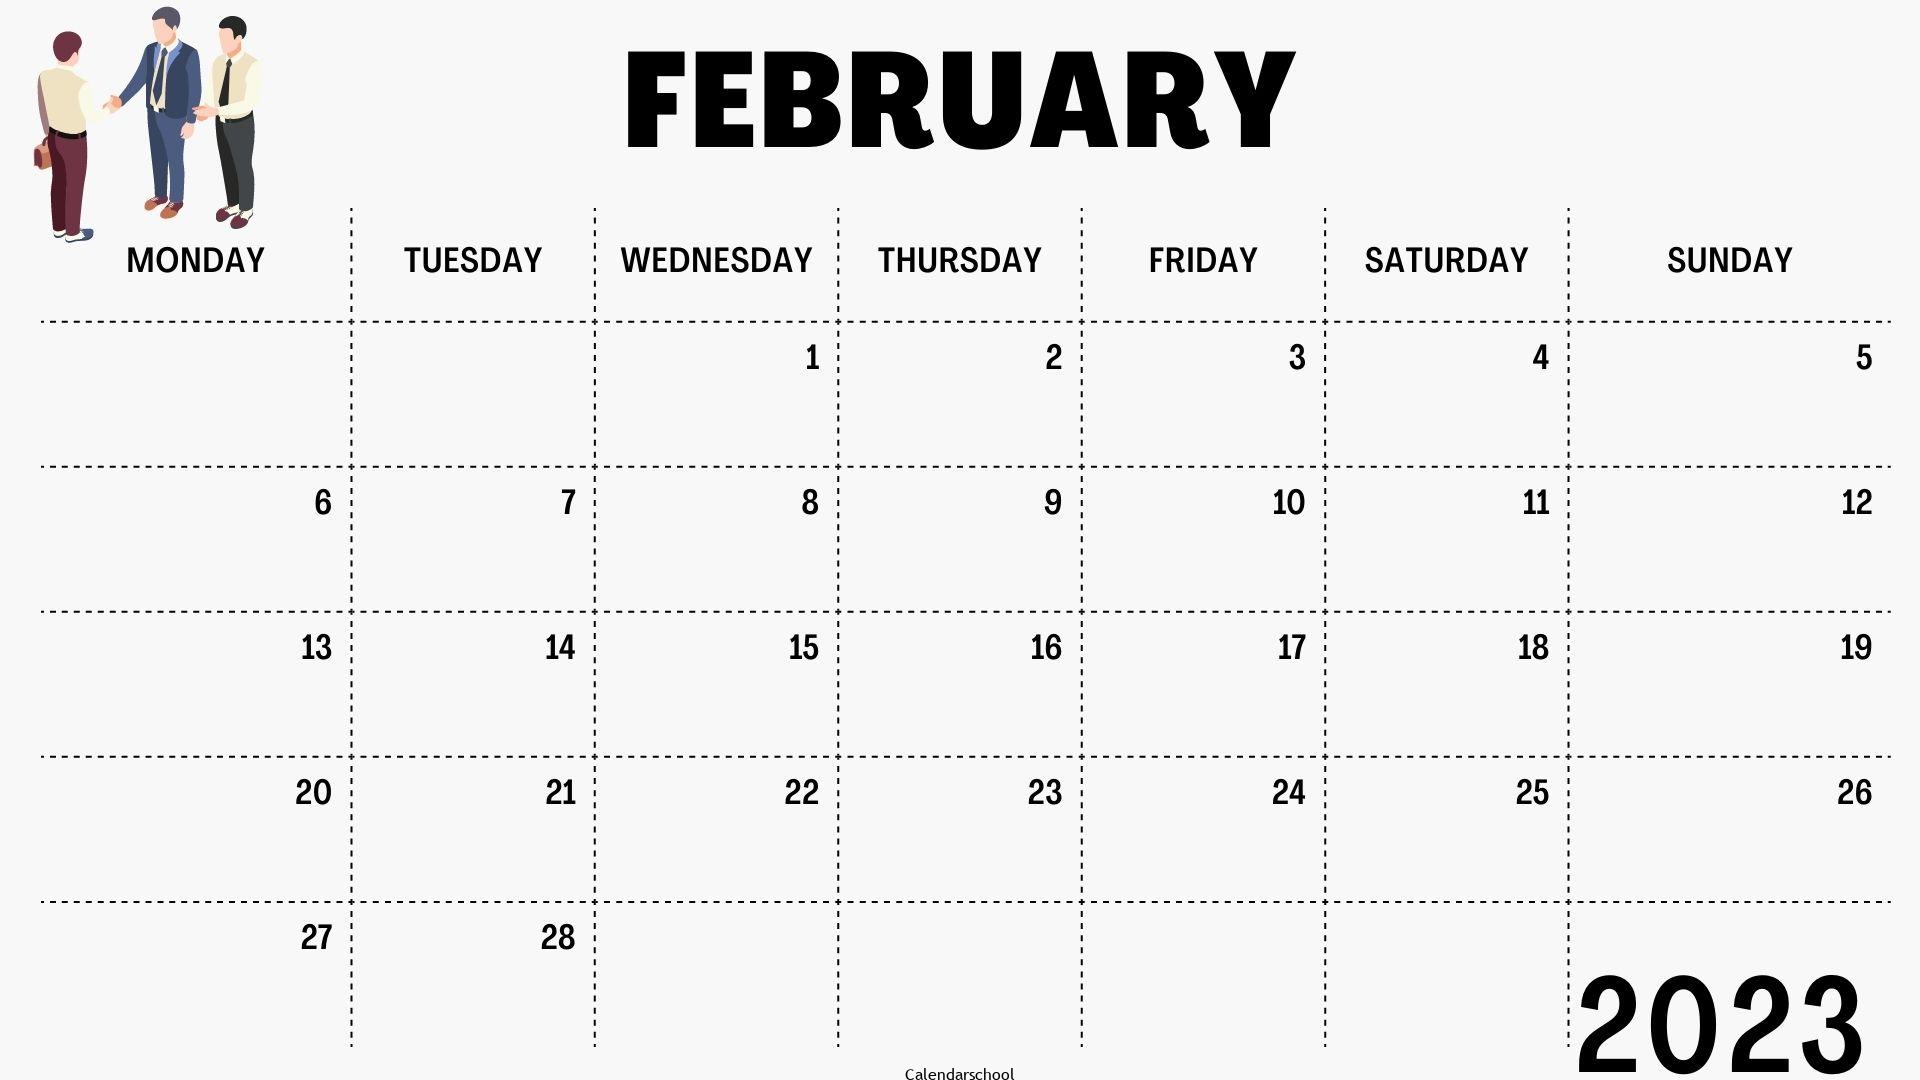 February 2023 Printable Calendar in Words